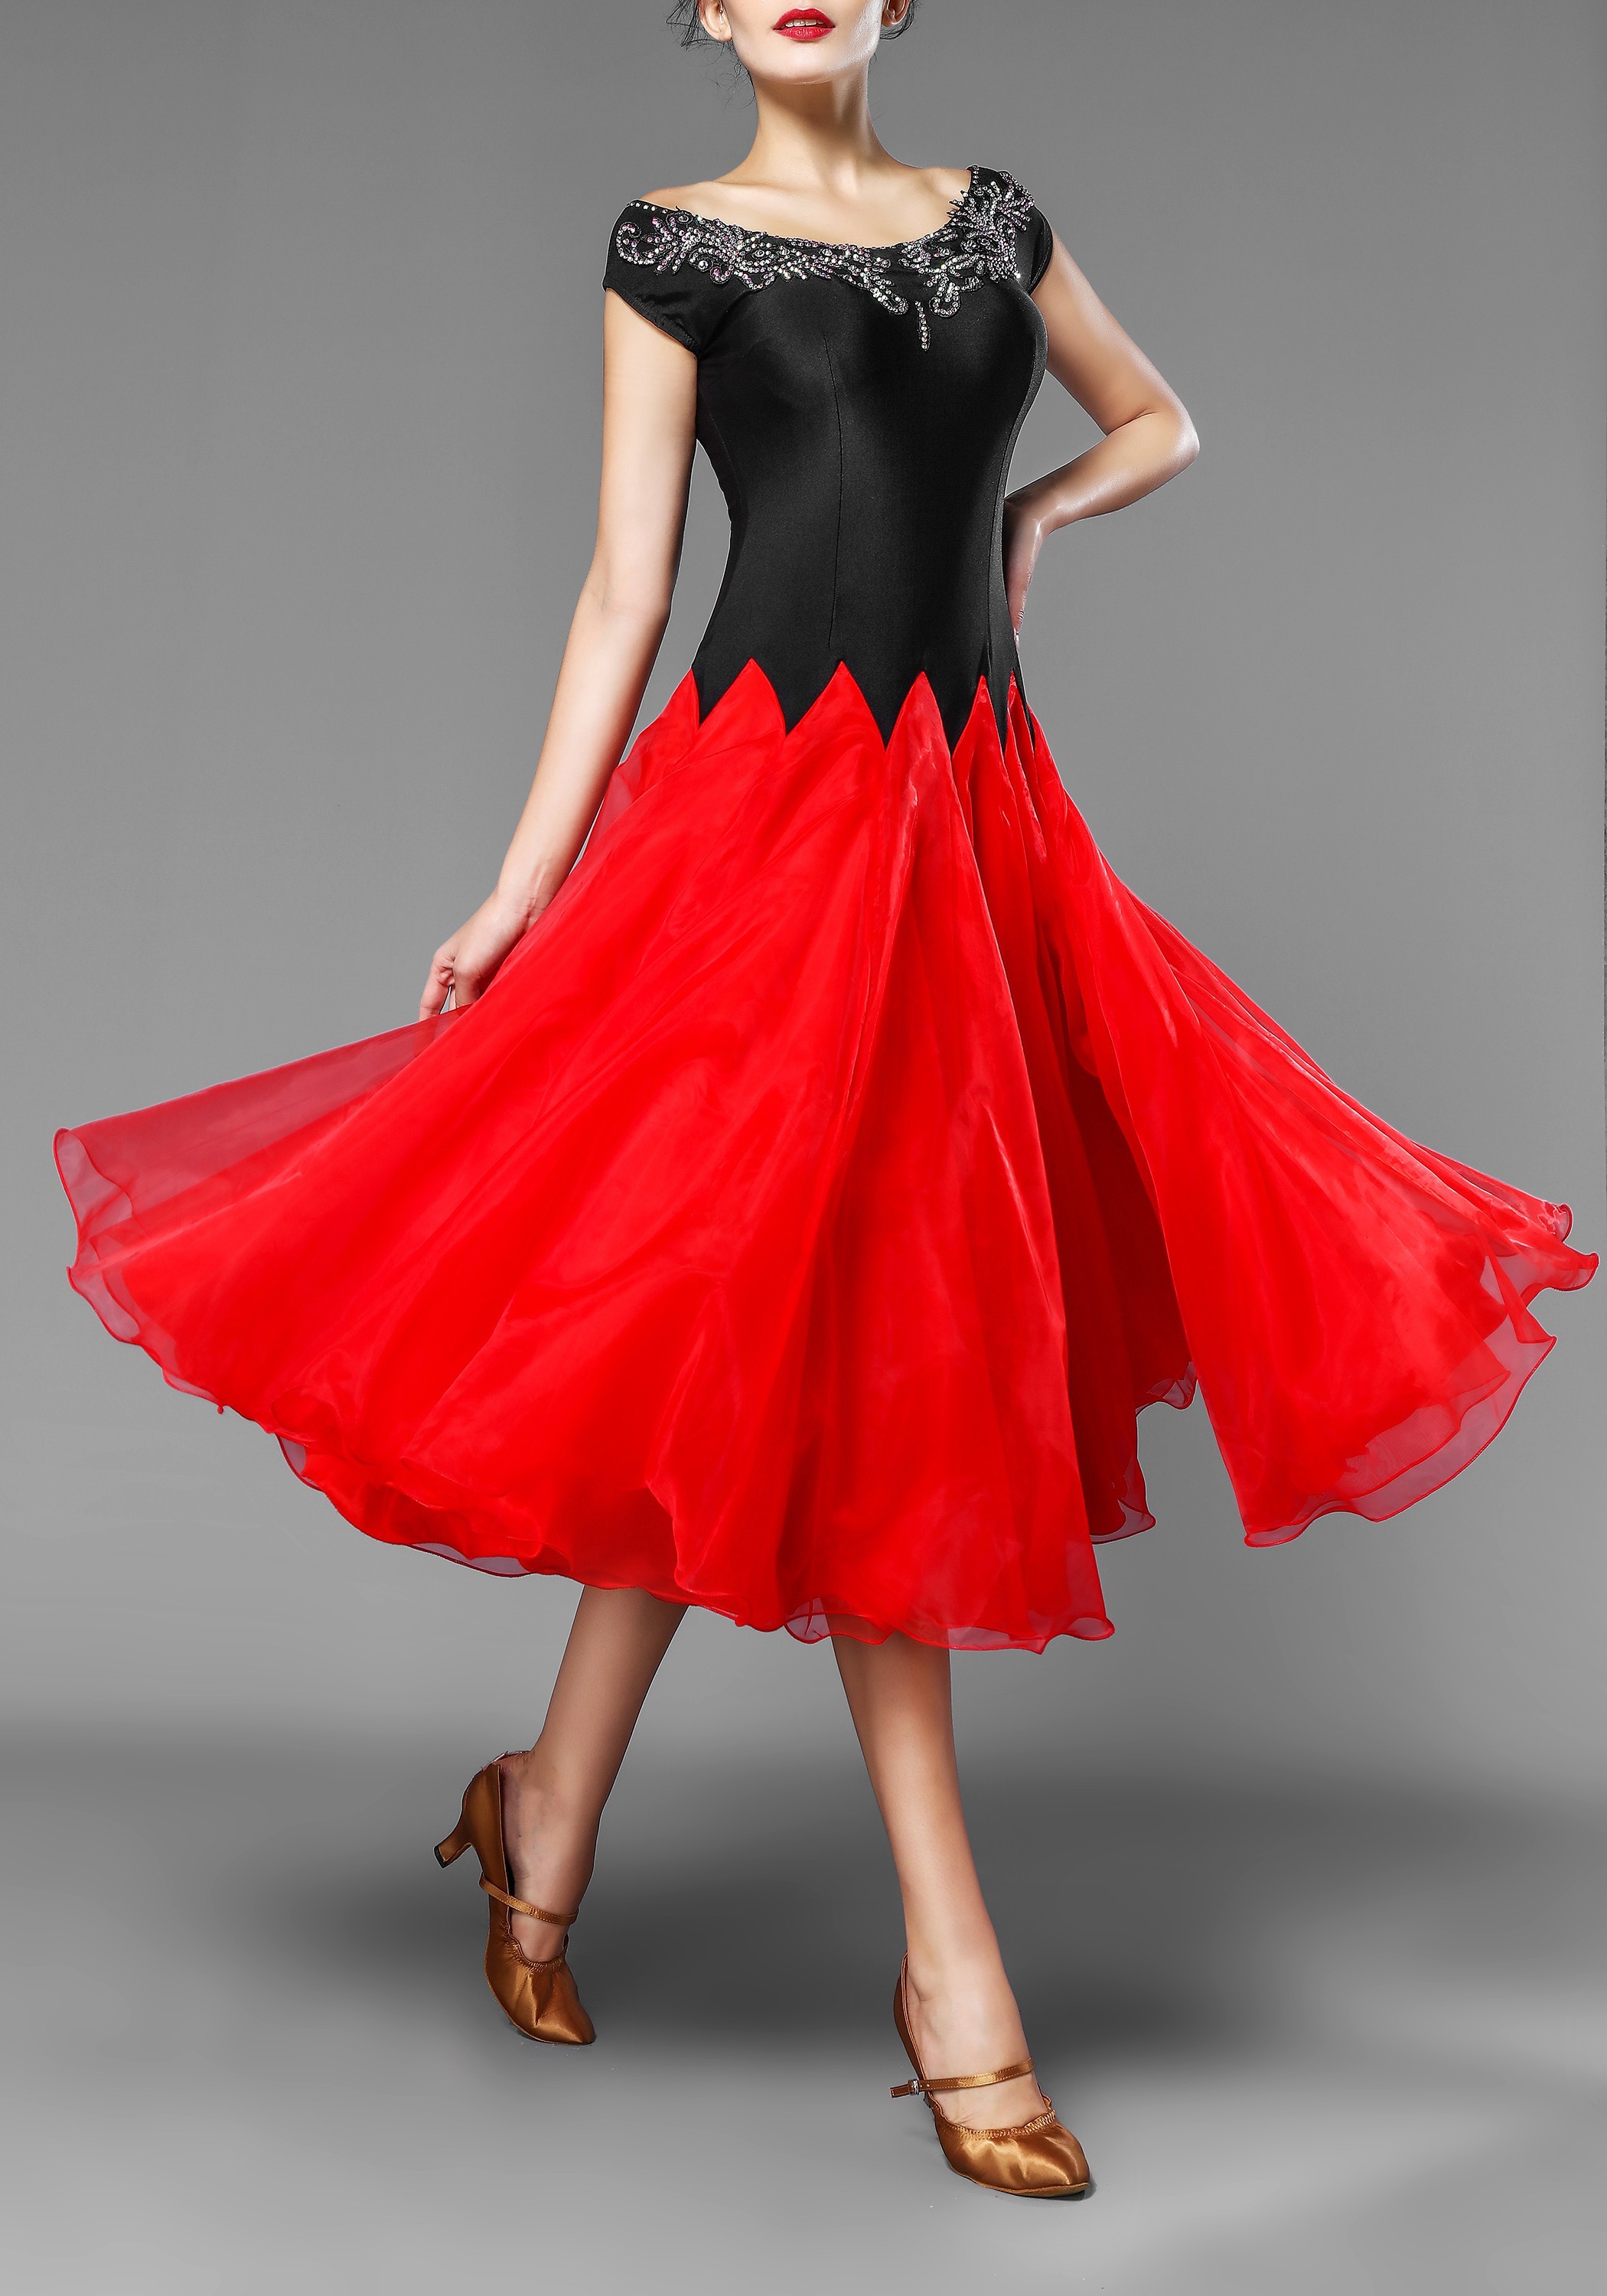 black top red skirt dress